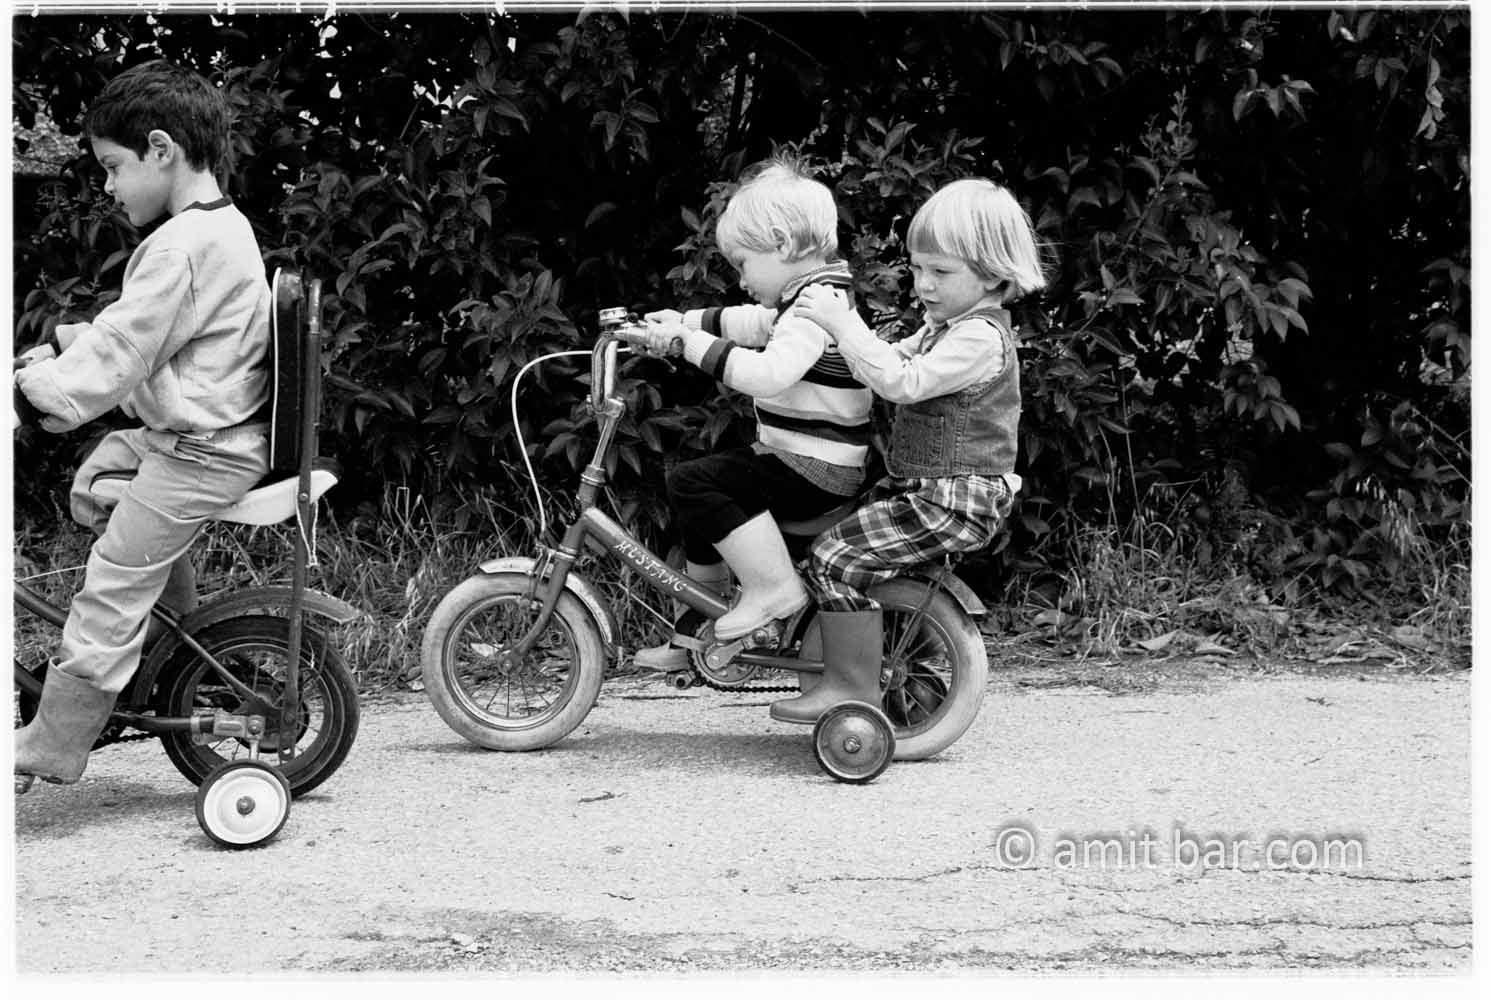 Biking: Three children biking on two bycicles